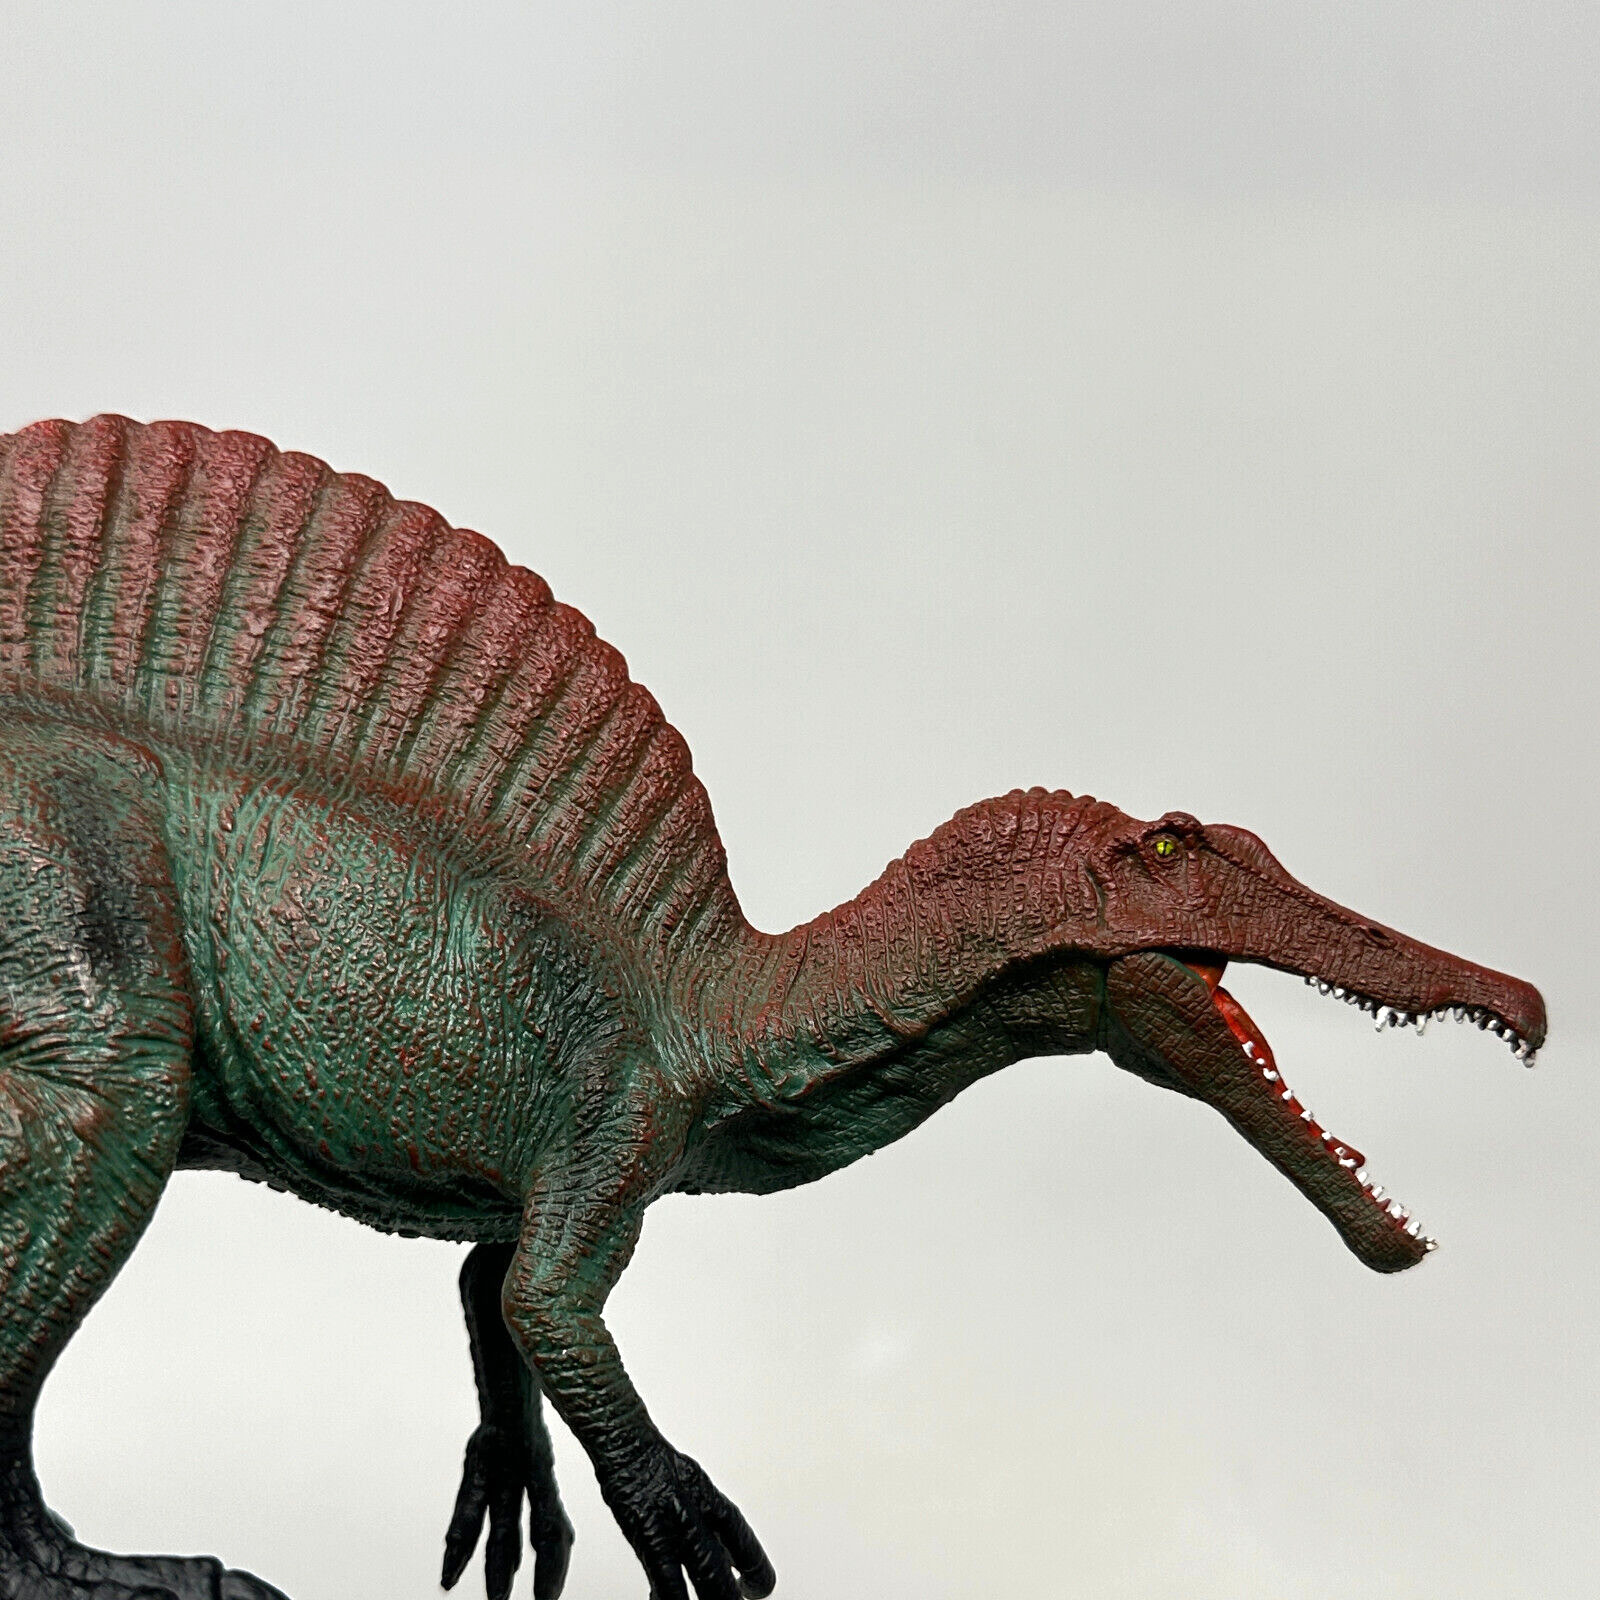 Mojo Deluxe Spinosaurus Dinosaur Figure Articulated Jaw Figurine